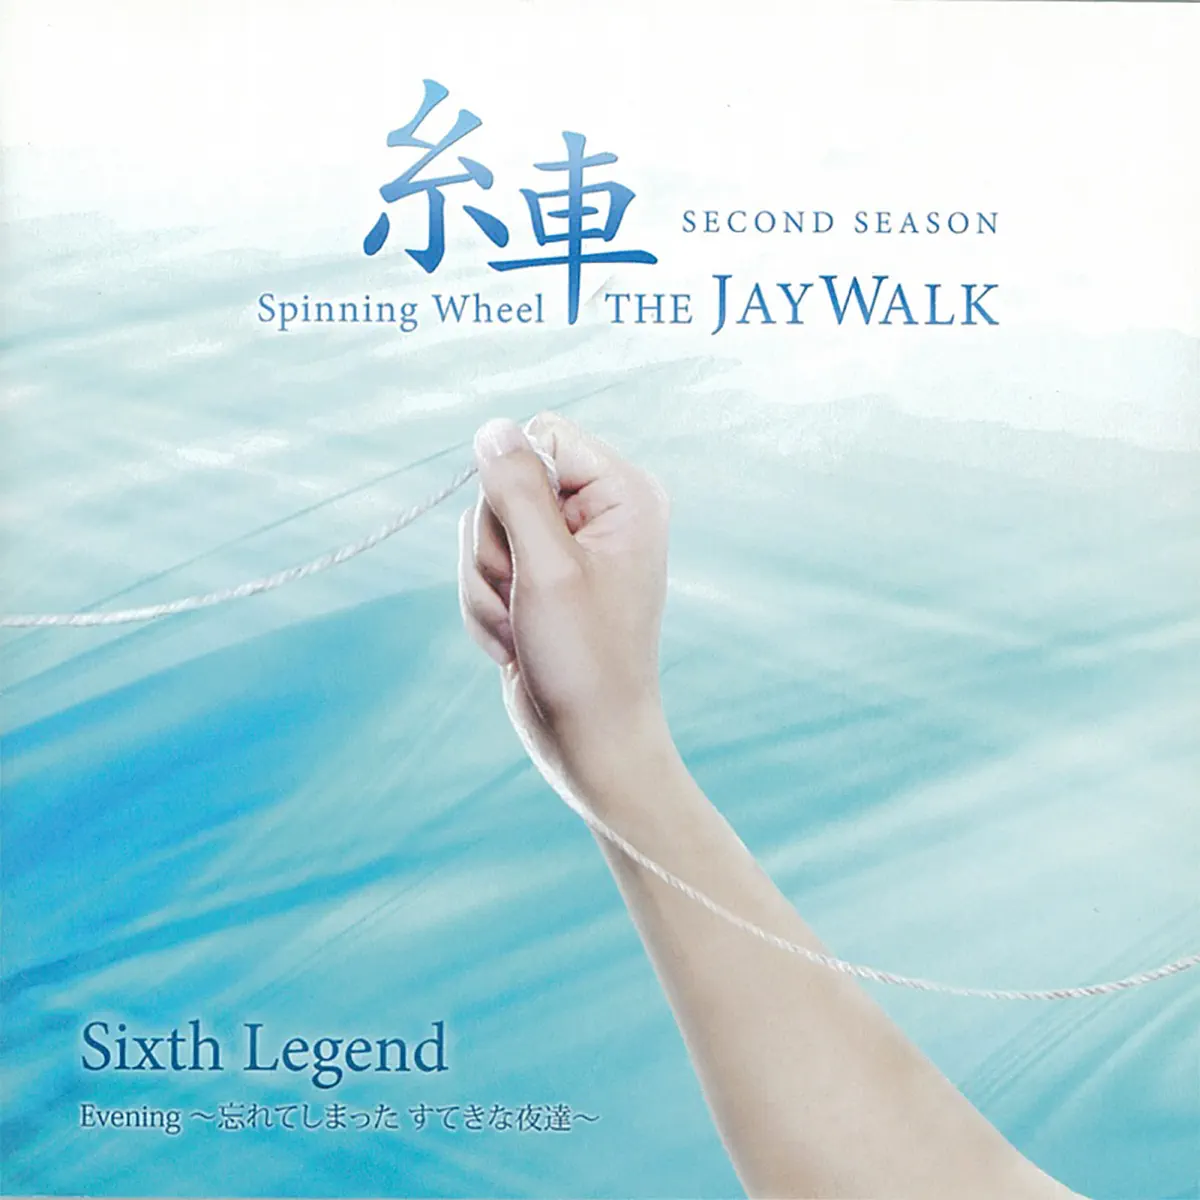 THE JAYWALK - 糸車 ~Spinning Wheel~ SECOND SEASON Sixth Legend「Evening ~忘れてしまった すてきな夜達~」 (2014) [iTunes Plus AAC M4A]-新房子